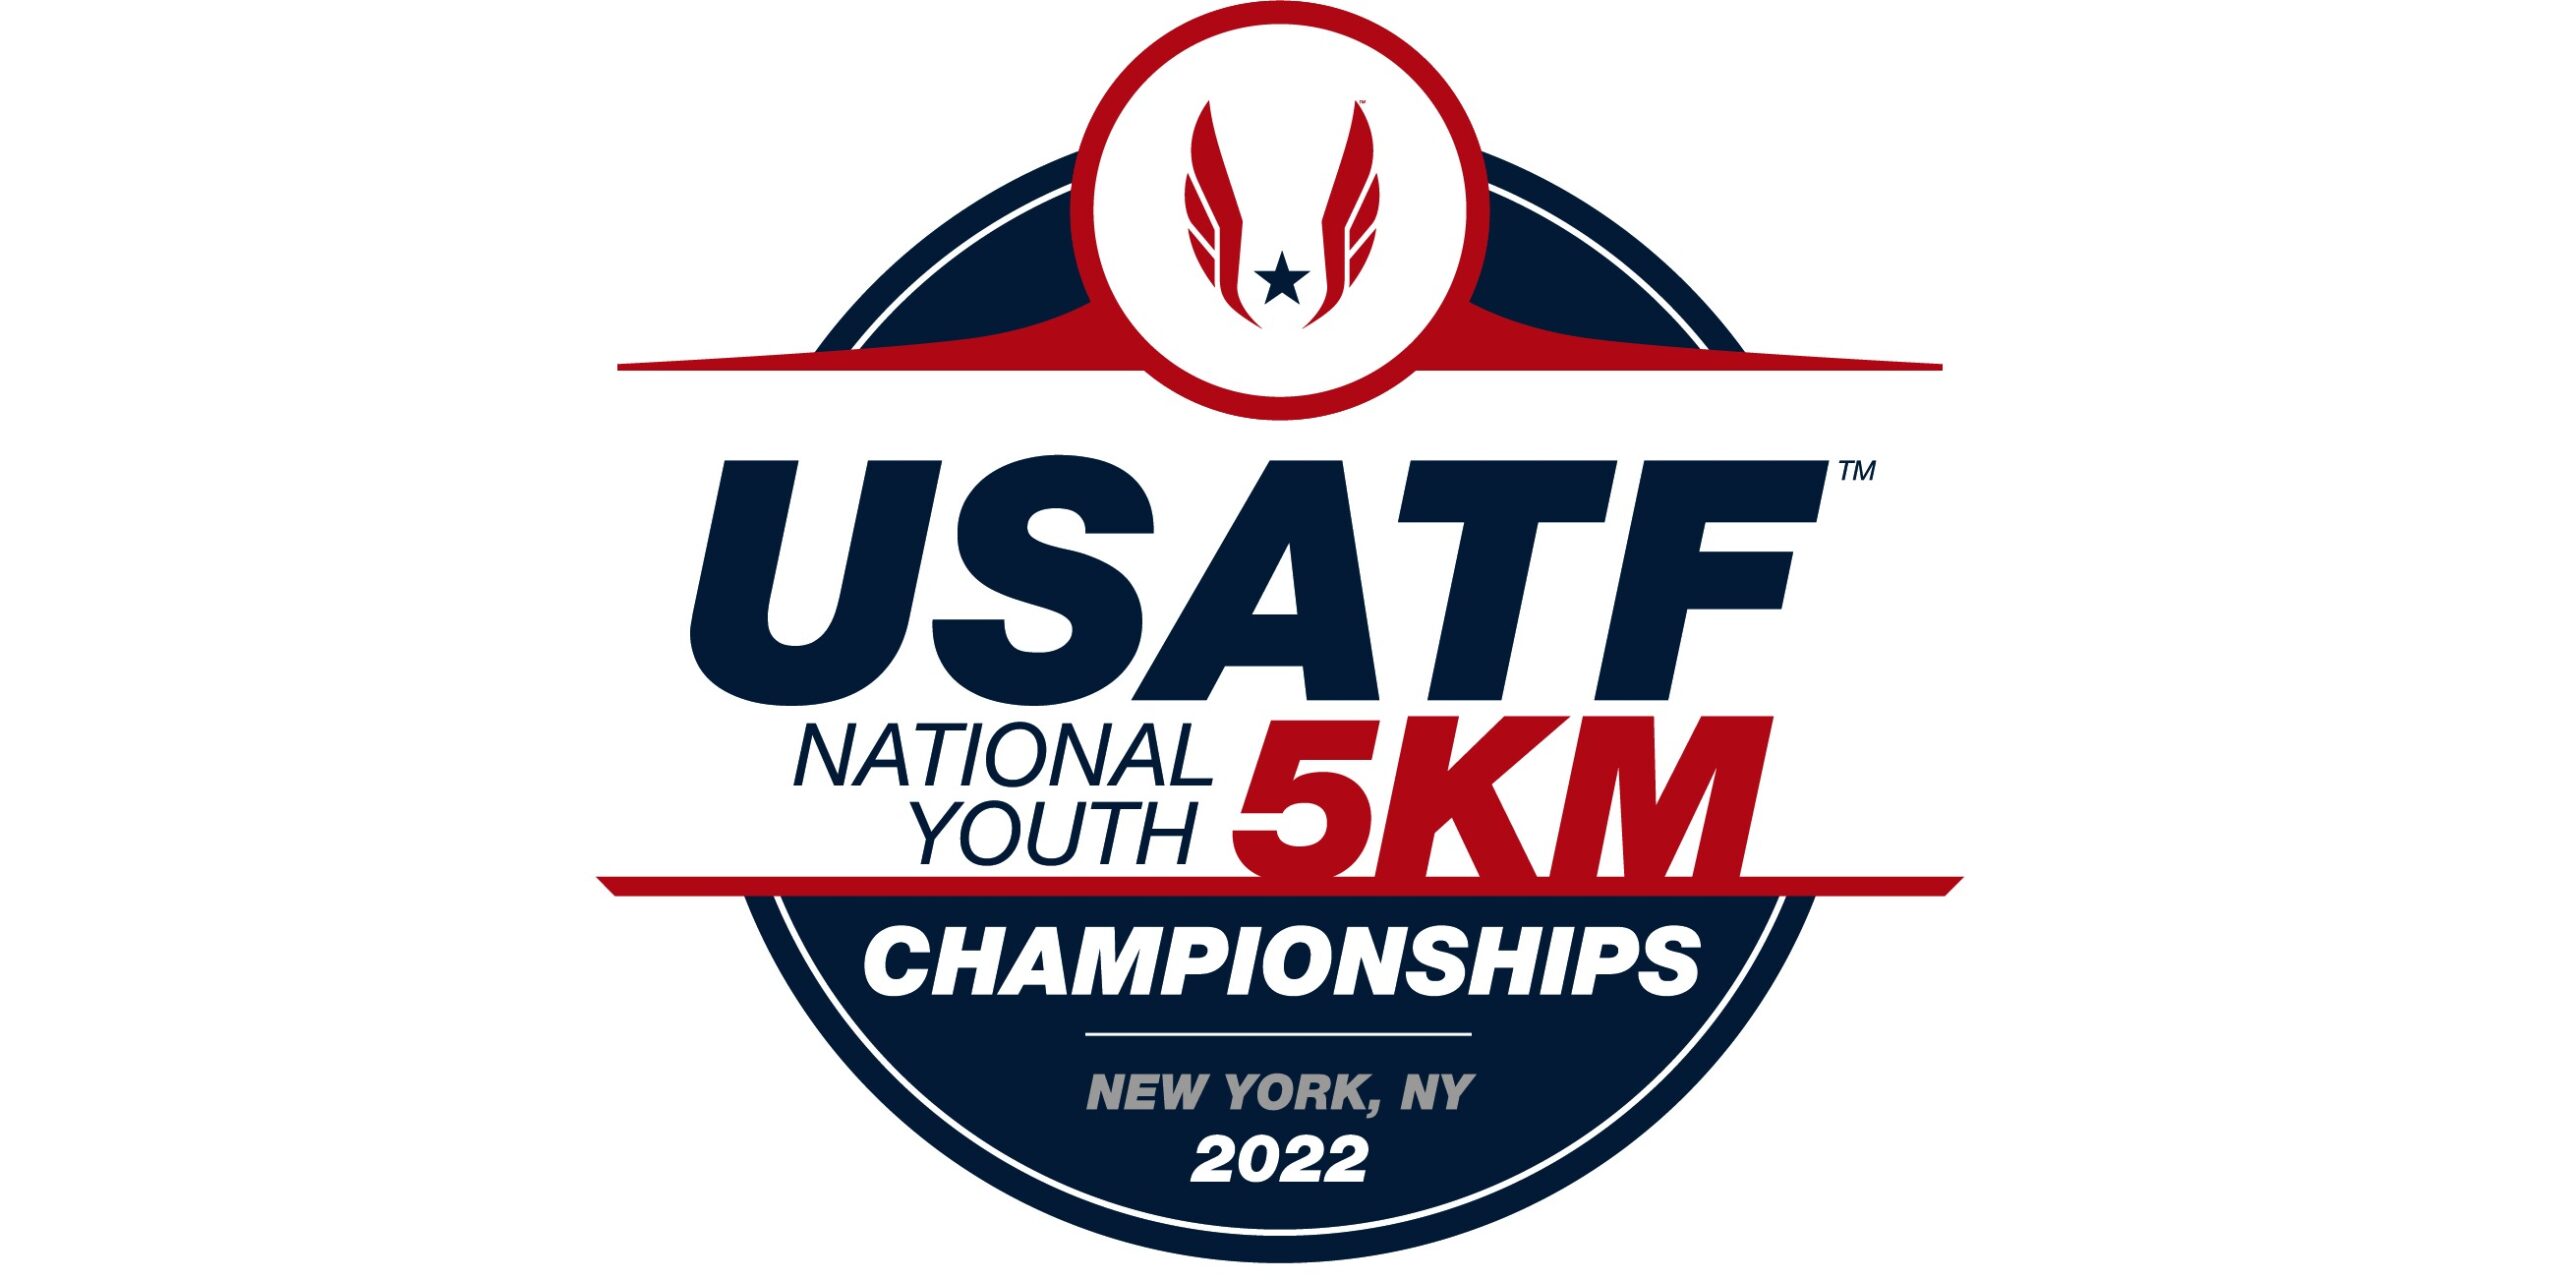 USATF National Youth 5KM Championships New York